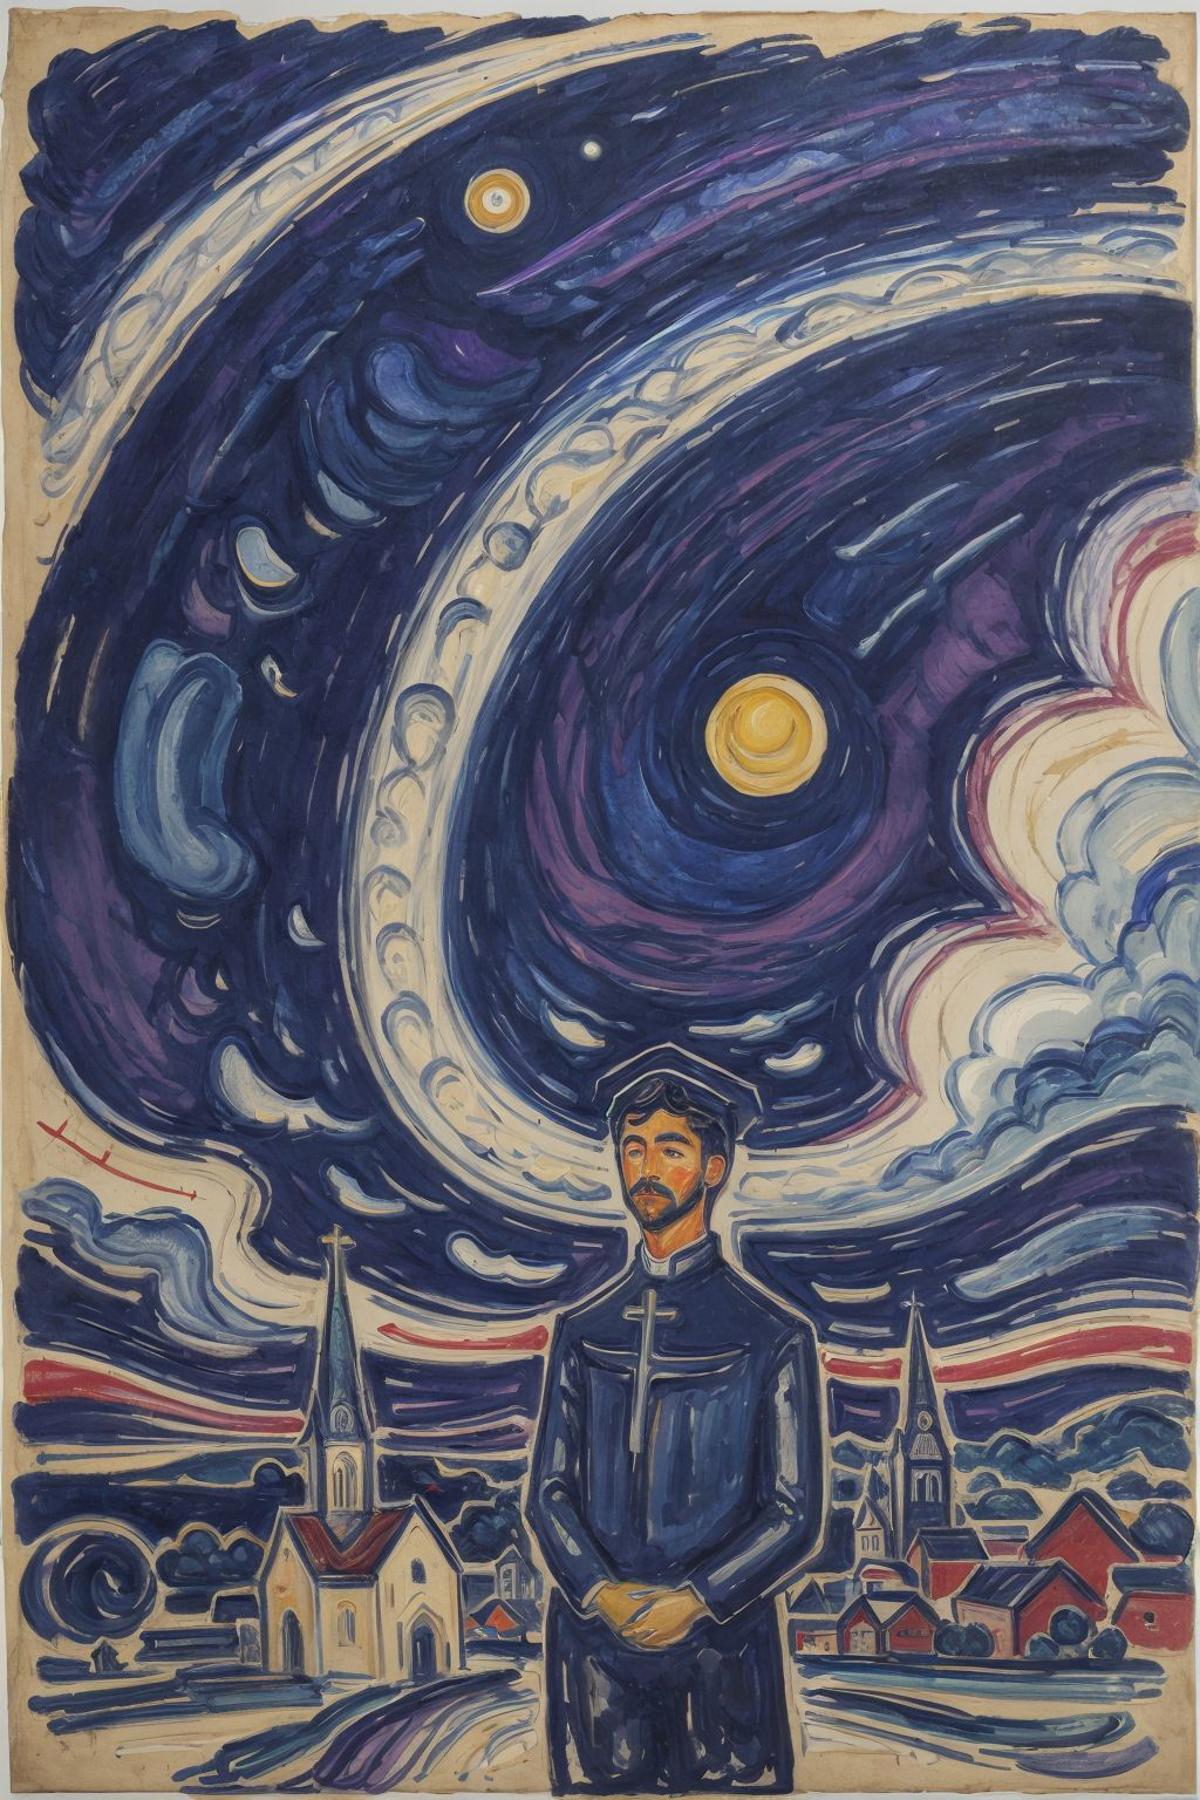 Edward Munch Style image by ChaosOrchestrator